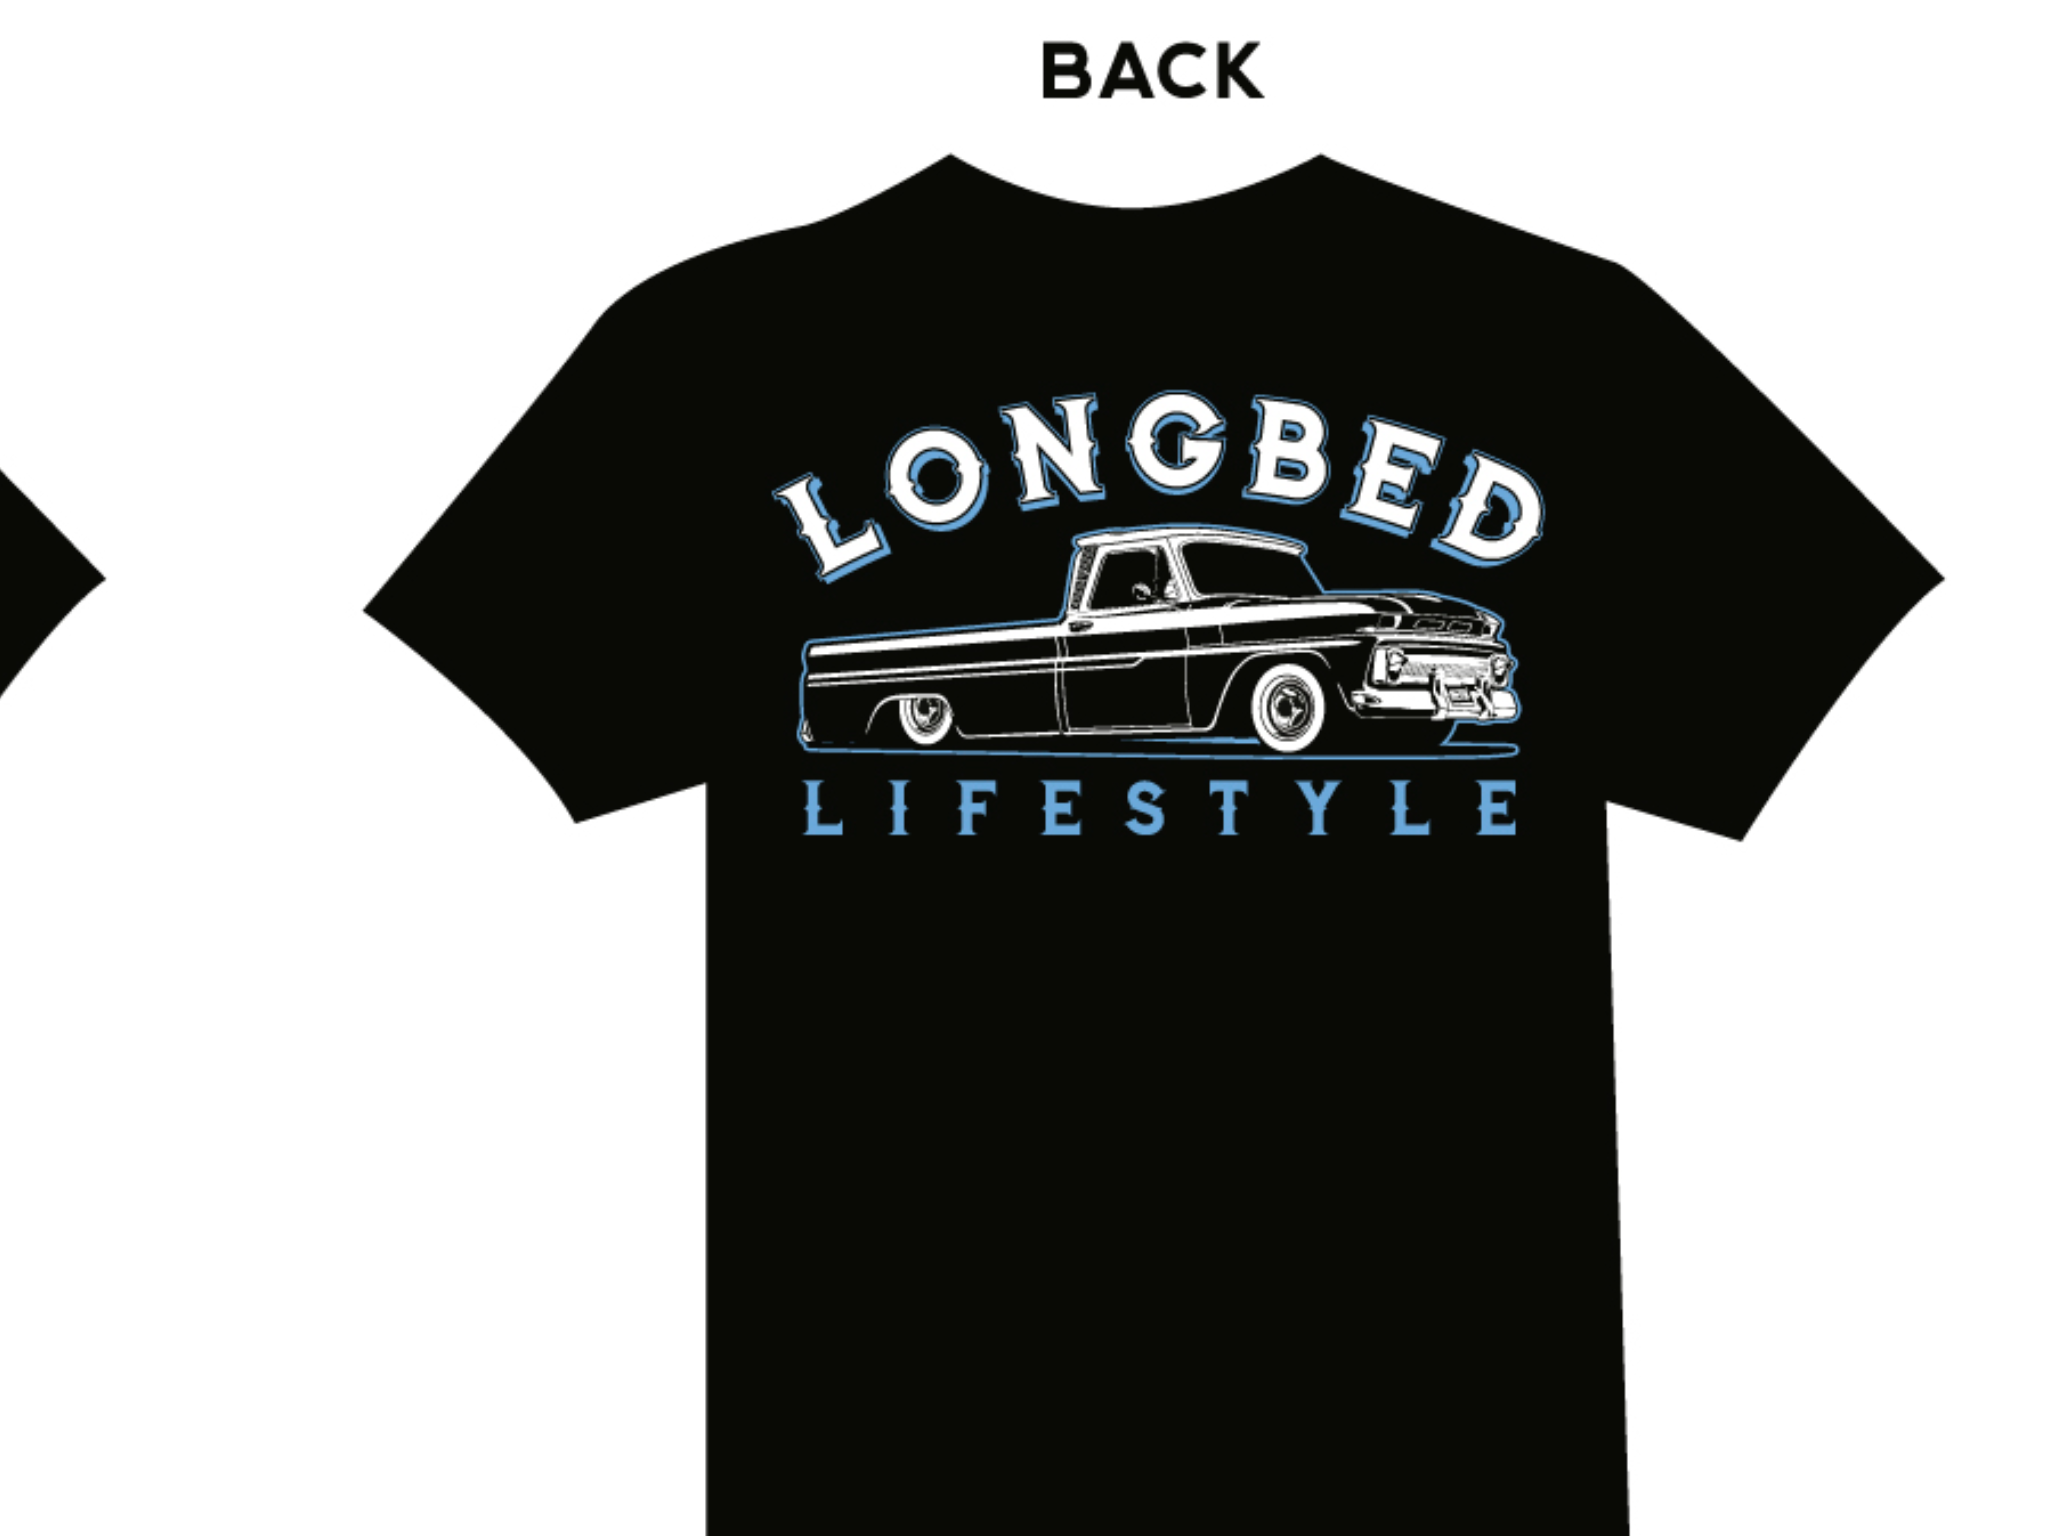 60-66 Longbed shirt